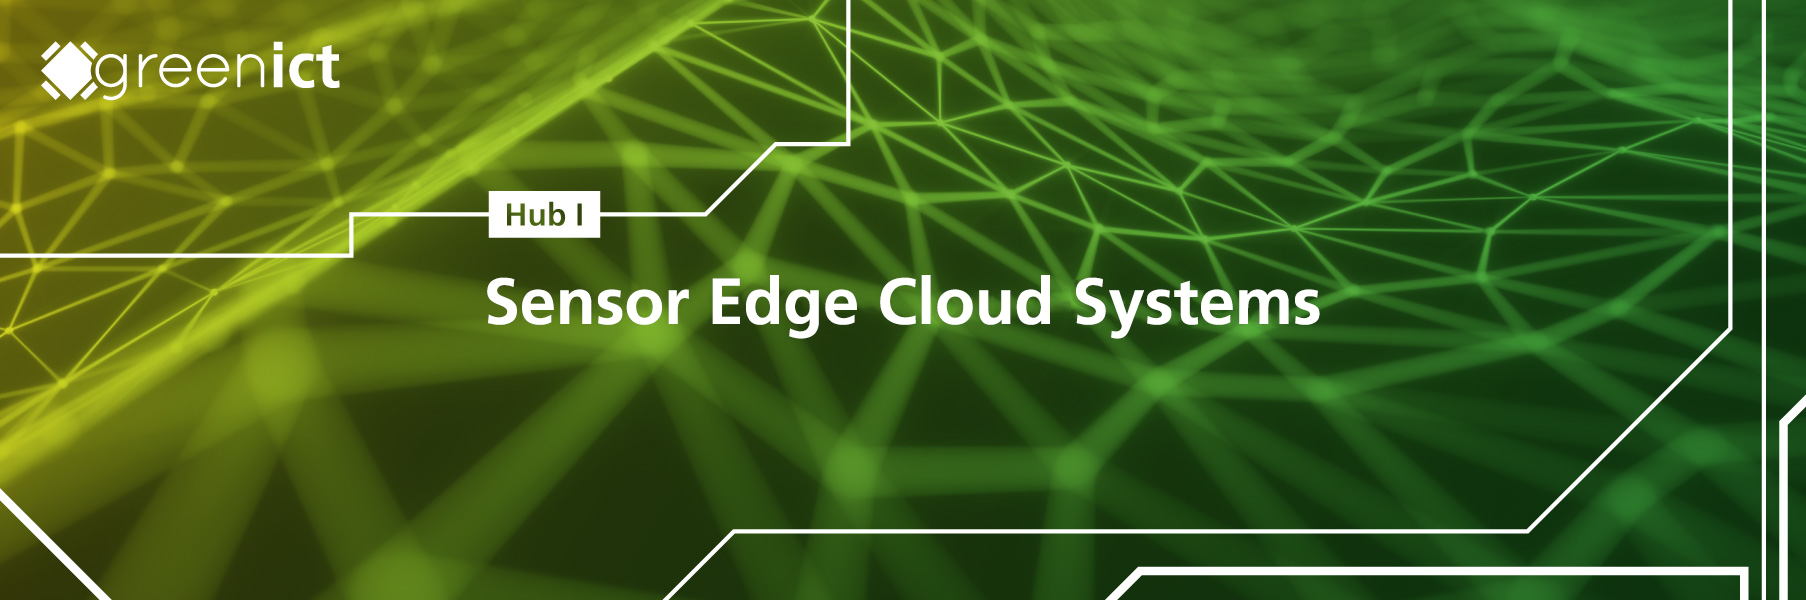 Hub 1: Sensor edge cloud systems